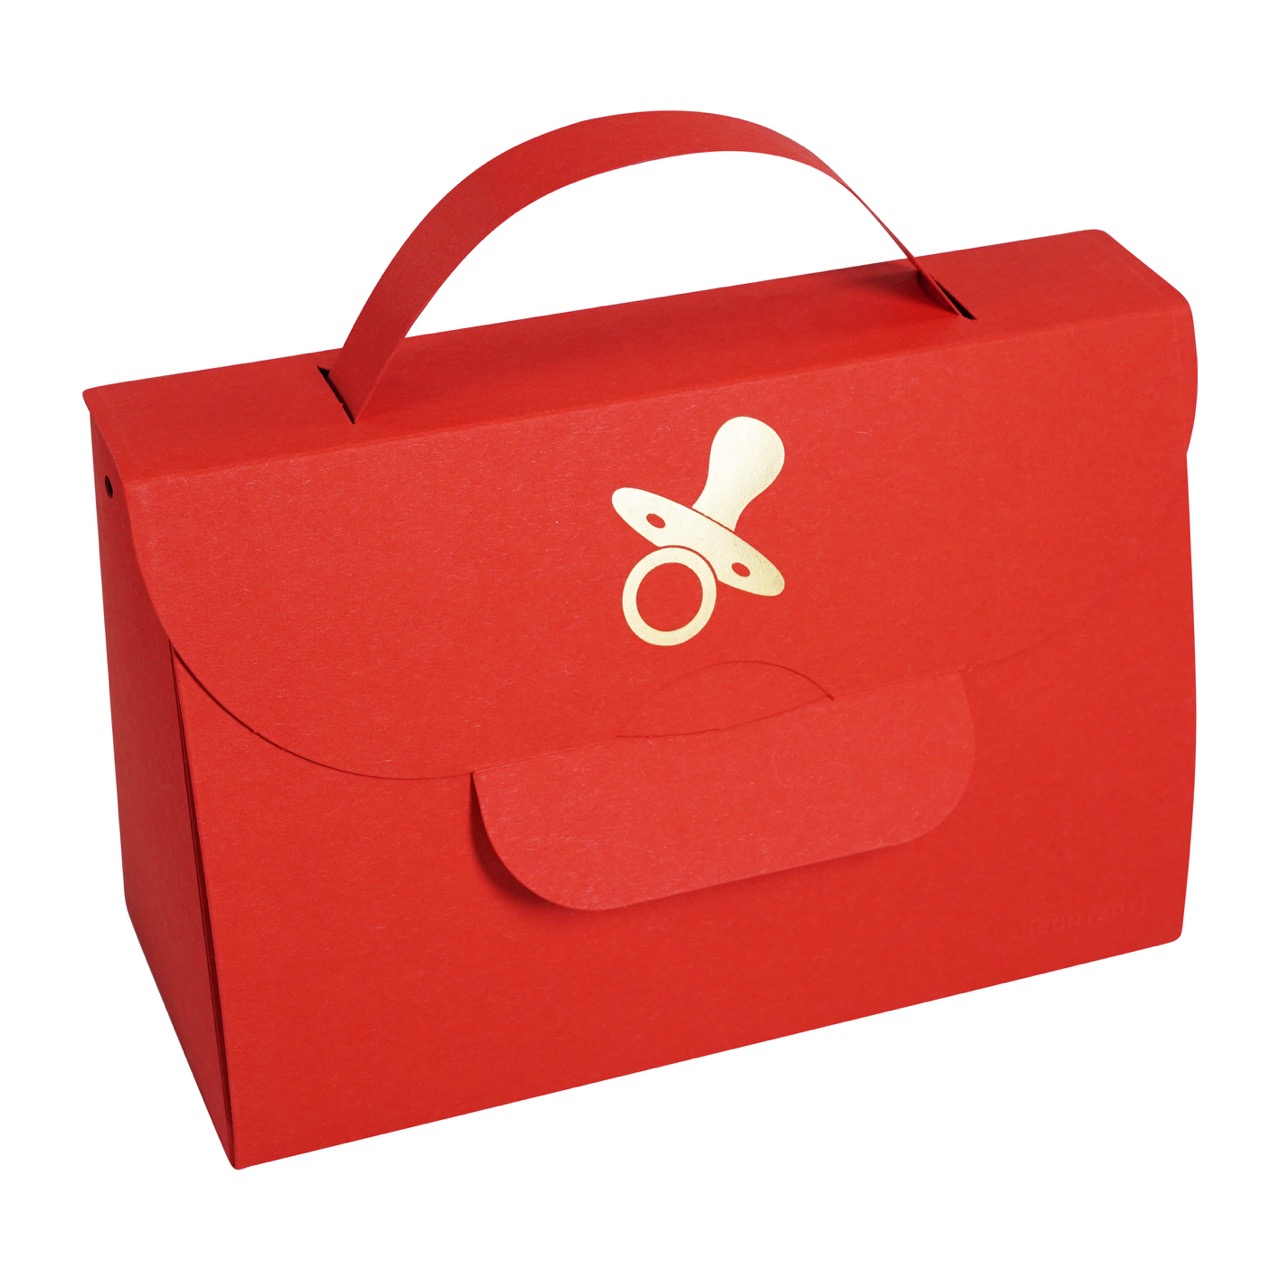 Buntbox Handbag XL Goldener Schnuller in Rubin